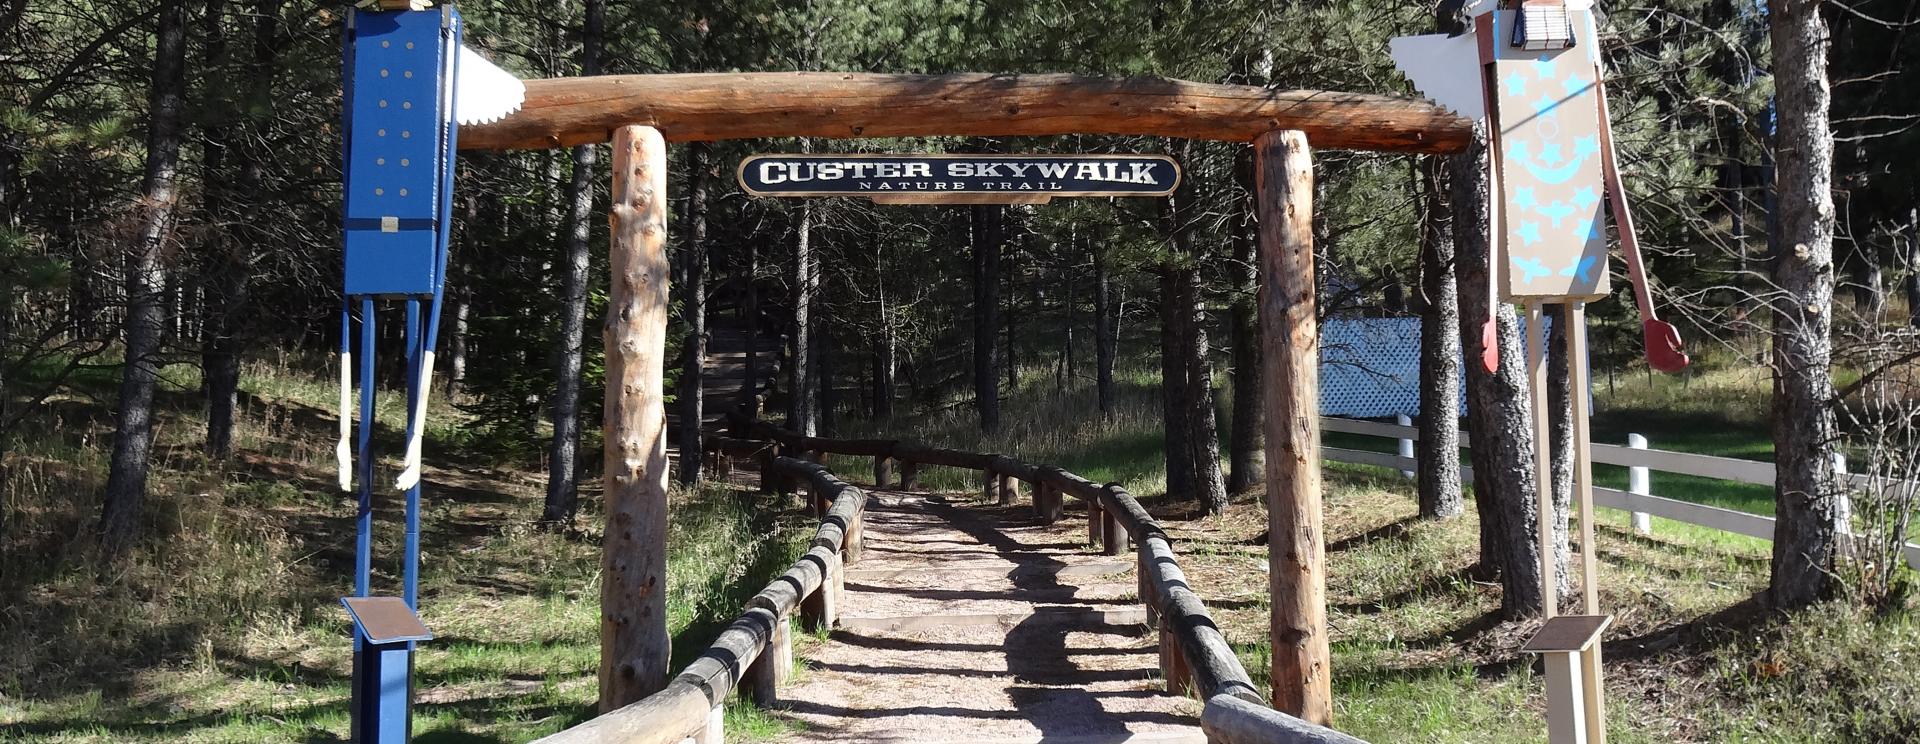 Custer Skywalk Trail